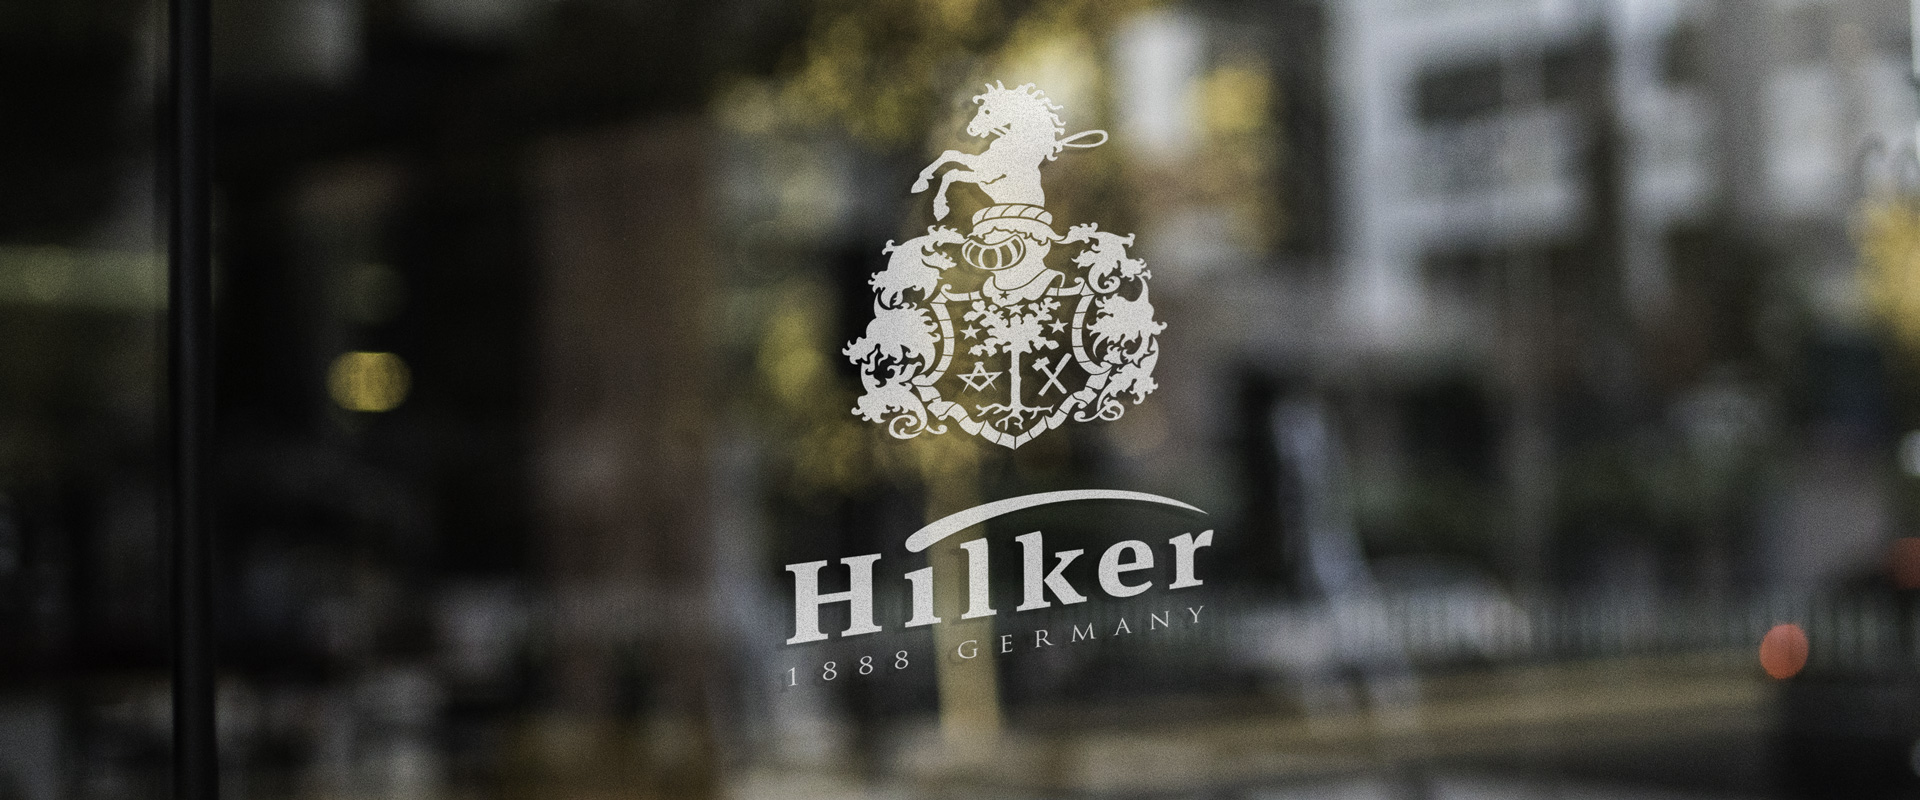 HILKER 1888 LogoDesign